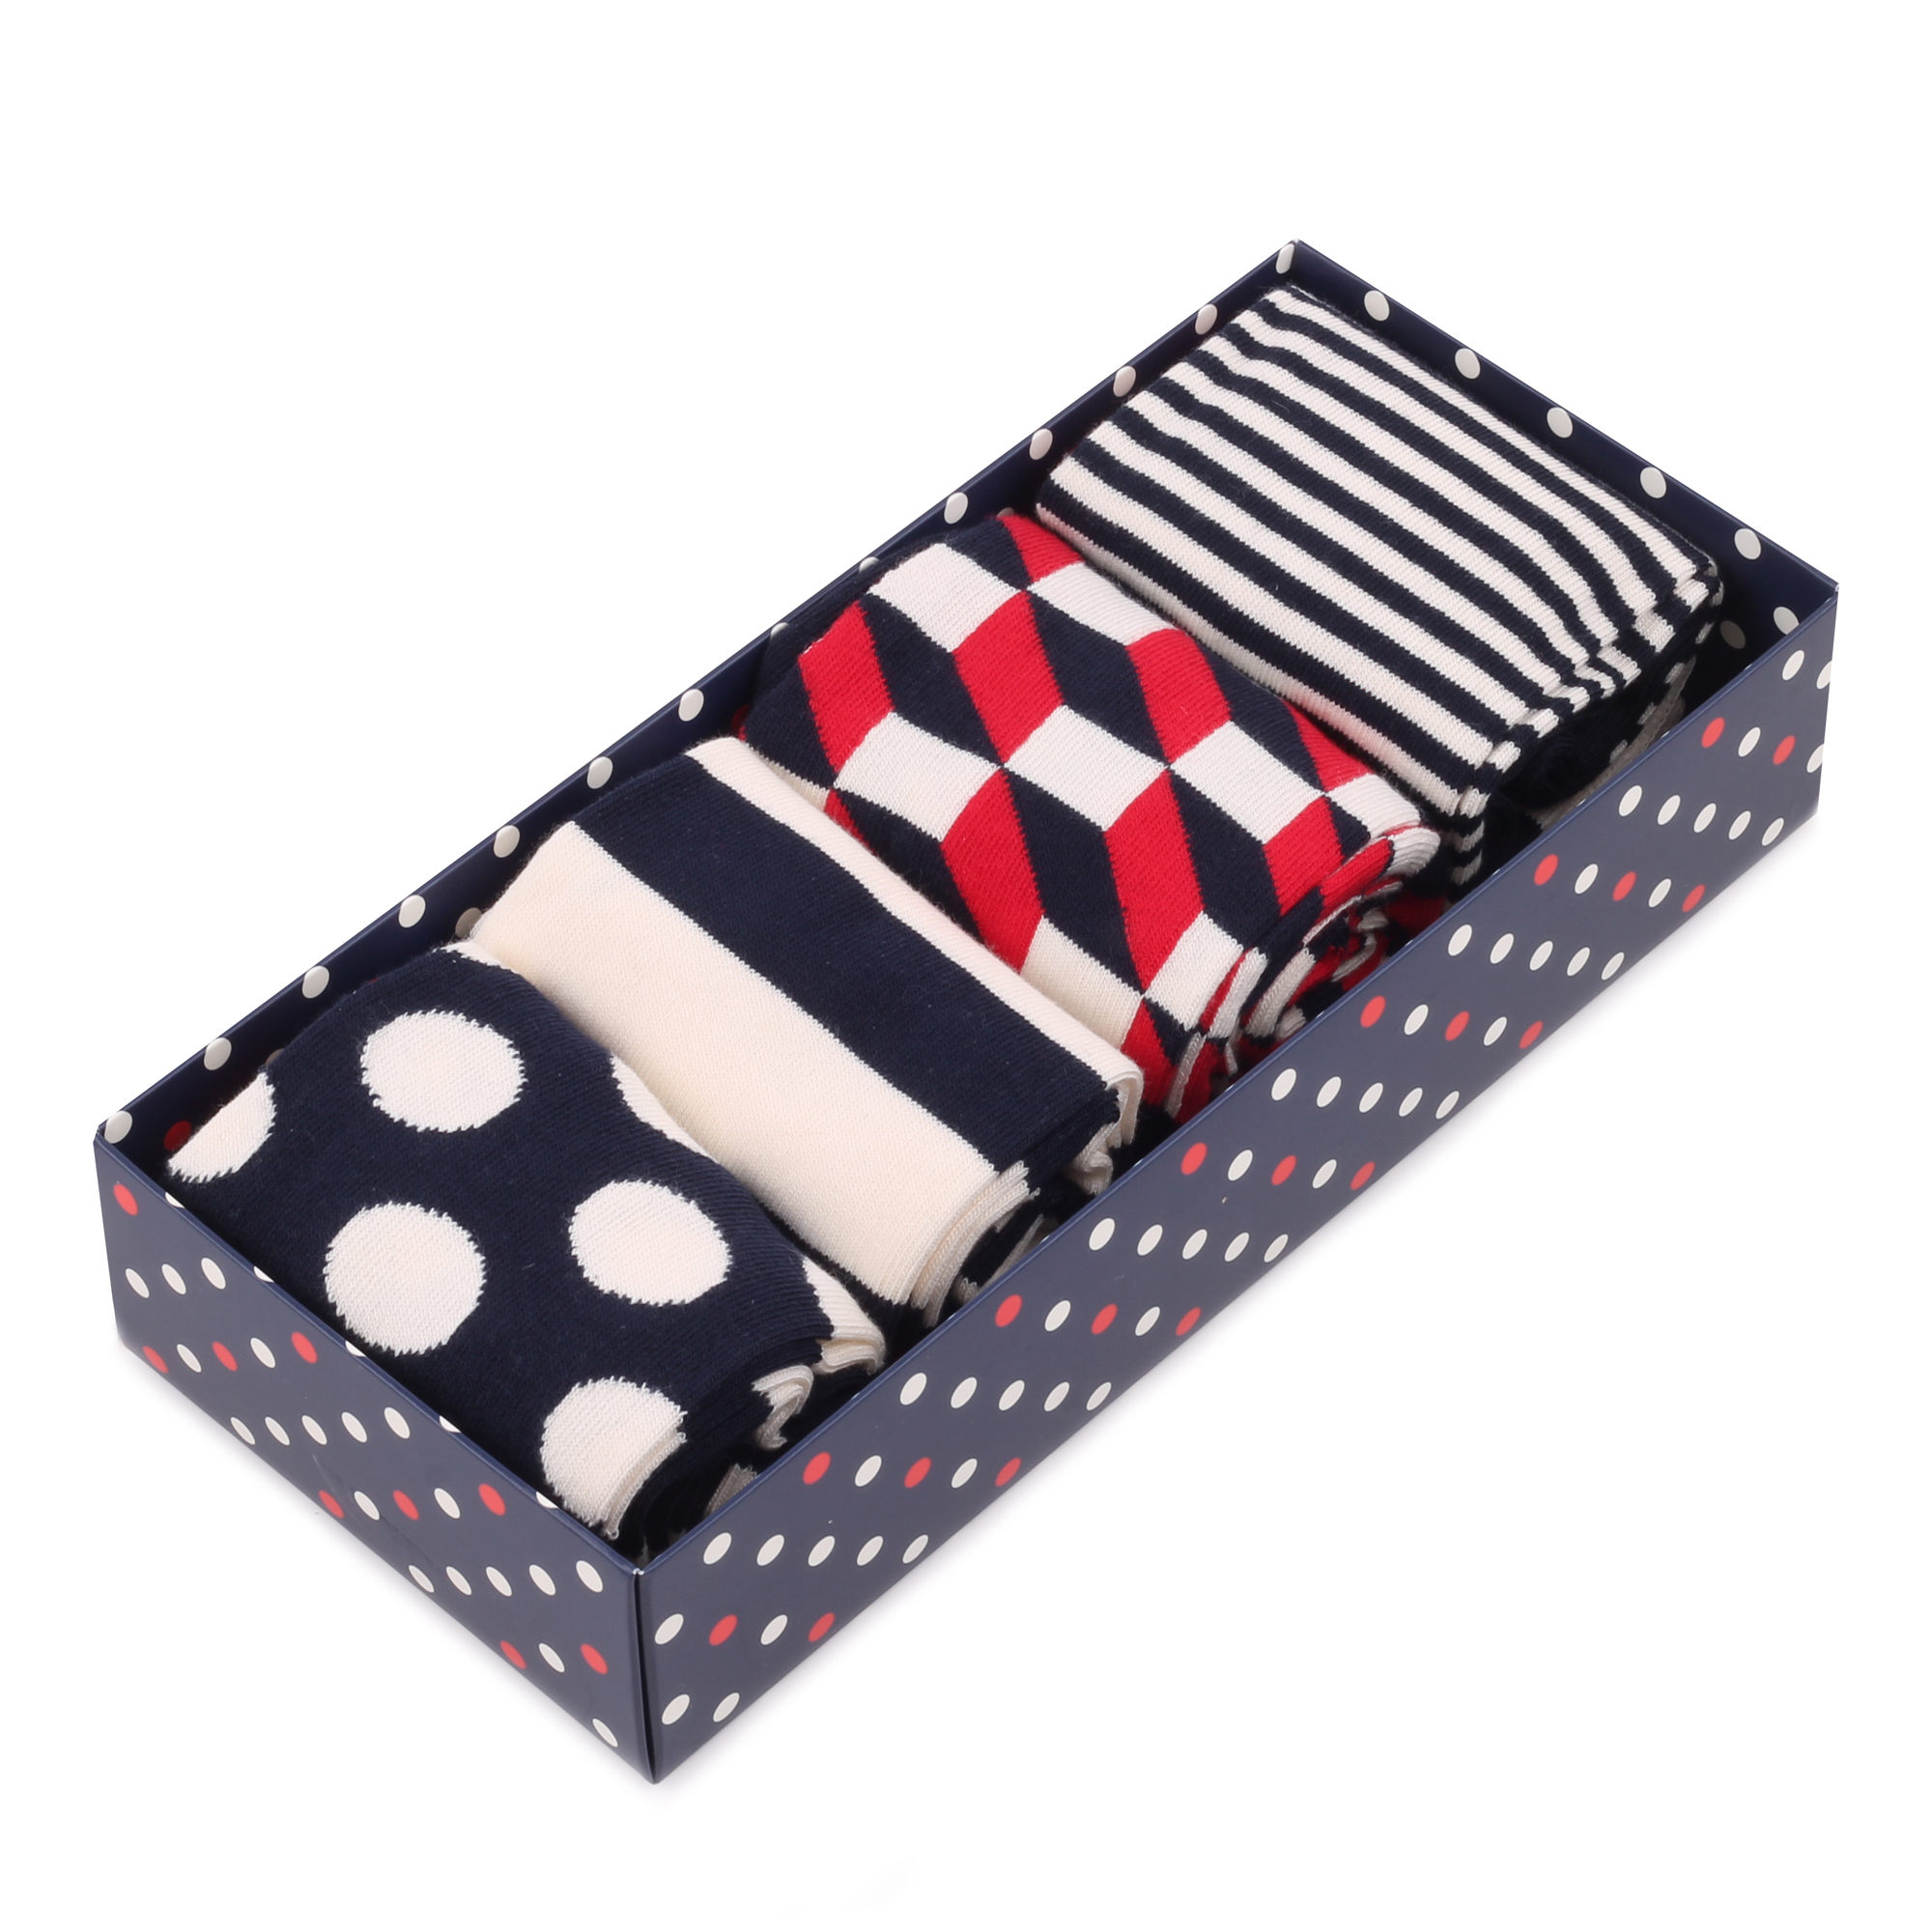 Подарочный набор носков унисекс Happy Socks Stripe Filled Optic 4 Pair Pack красный 41-46